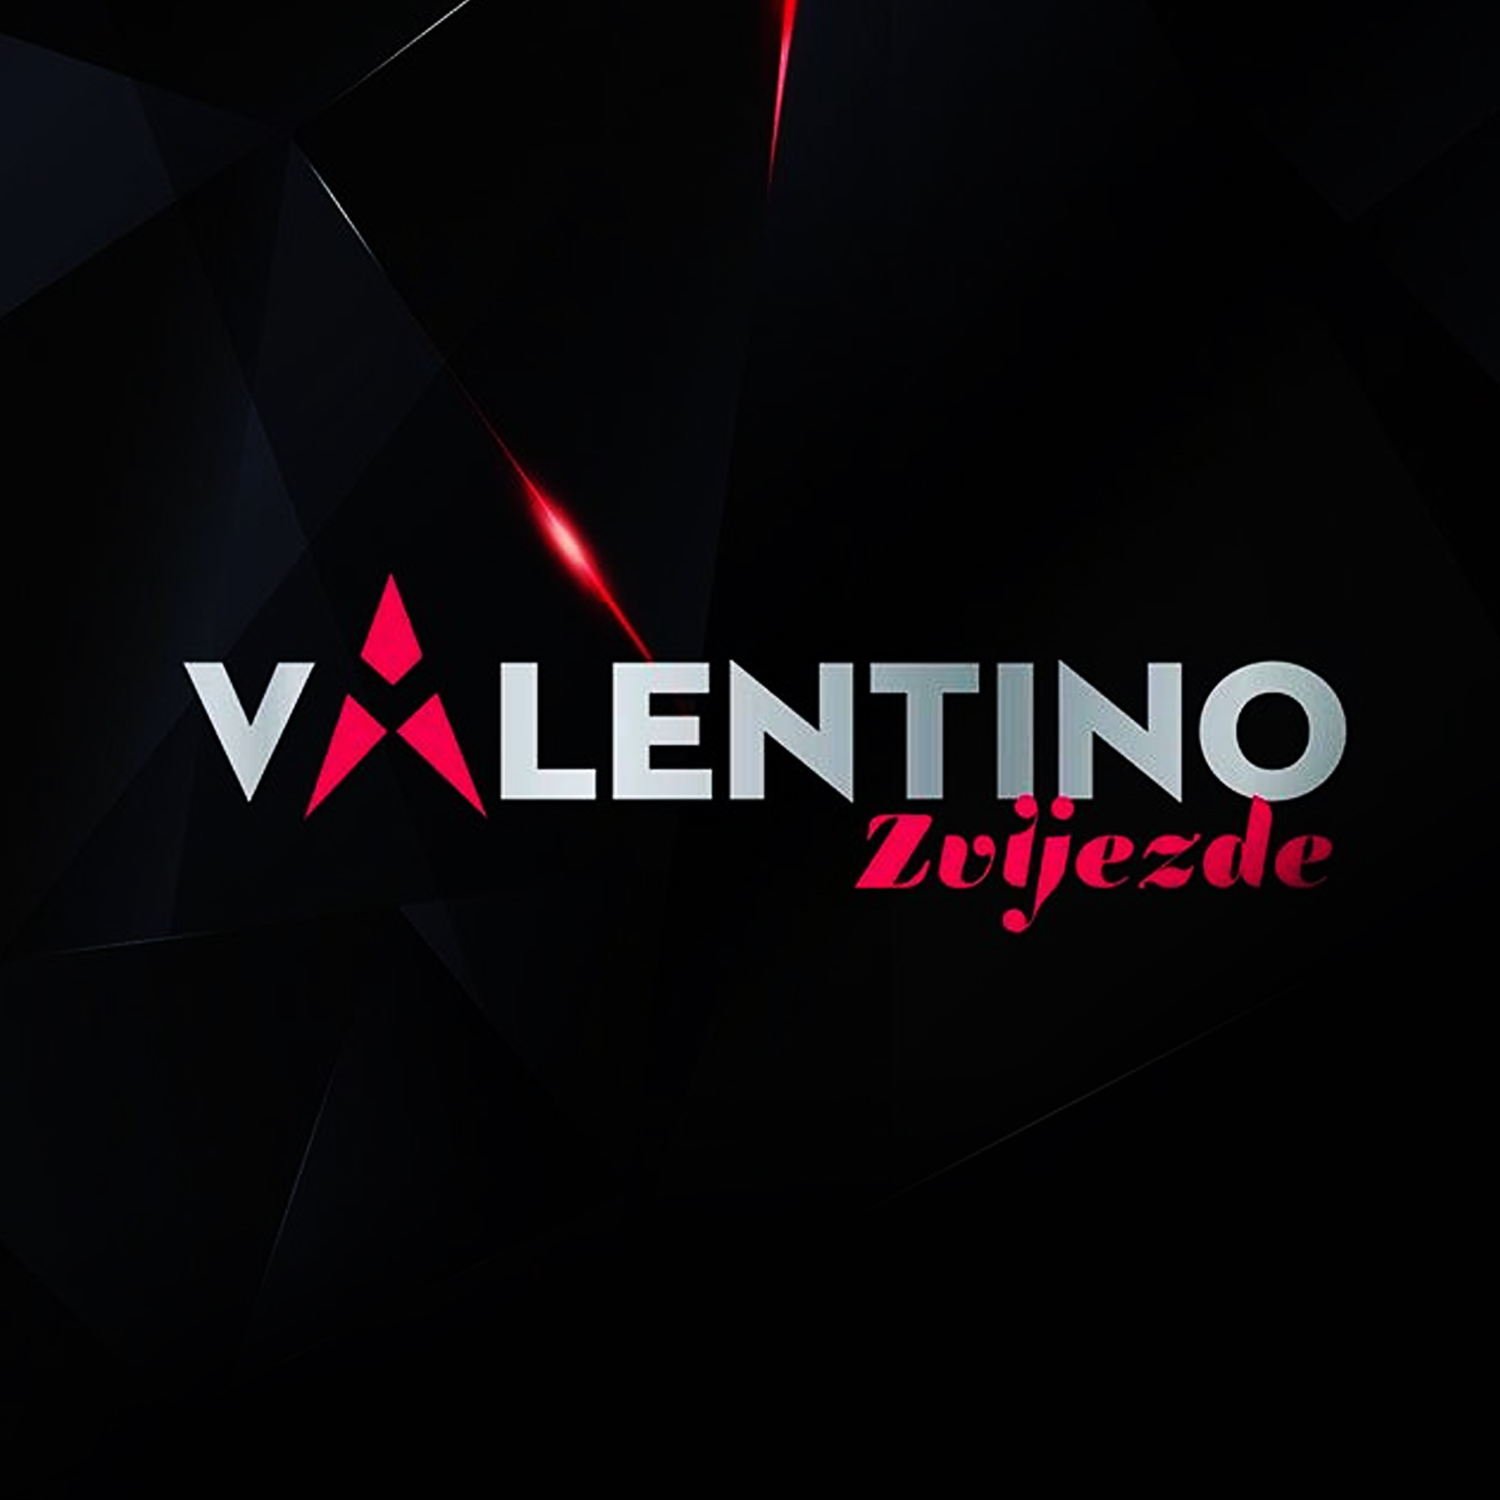 Valentino Zvijezde - Facebook, Instagram, Twitter, Snapchat, Website, Telefon, Email - Kontakt & Informacije | EMDC Network